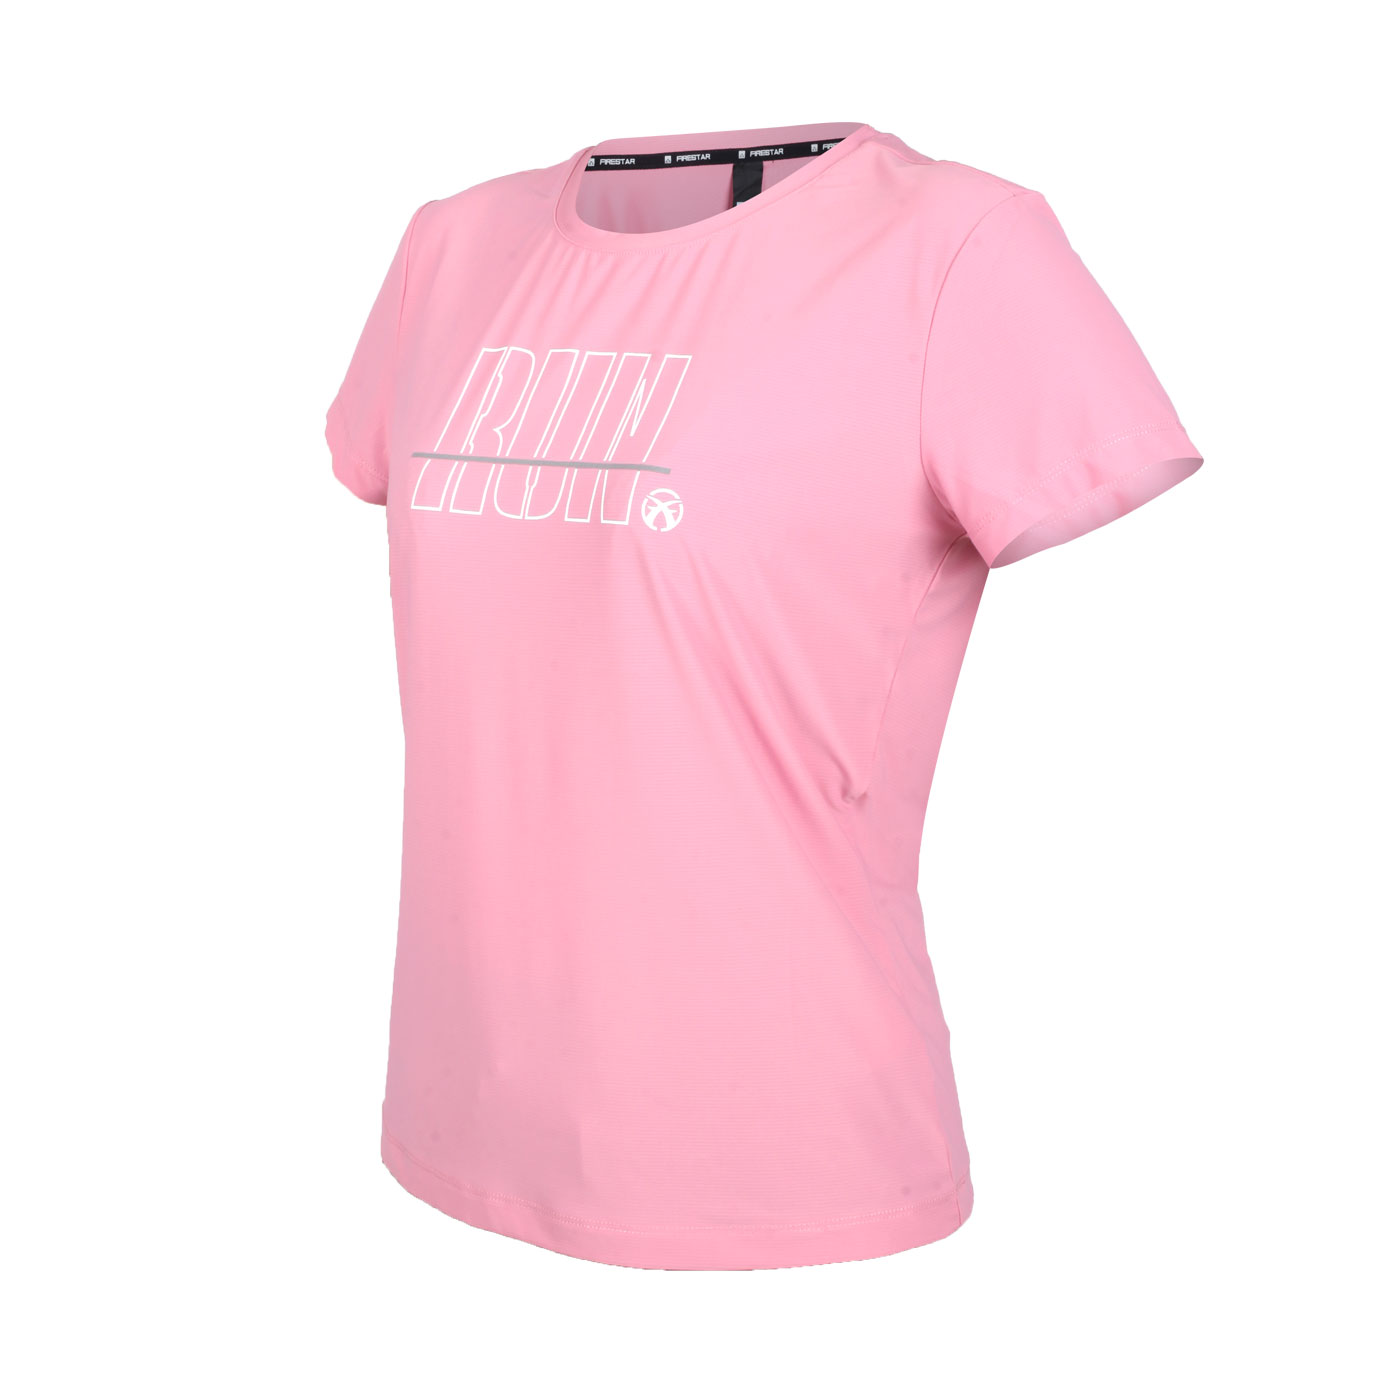 FIRESTAR 女款彈性印花短袖T恤 DL265-43 - 粉紅白灰